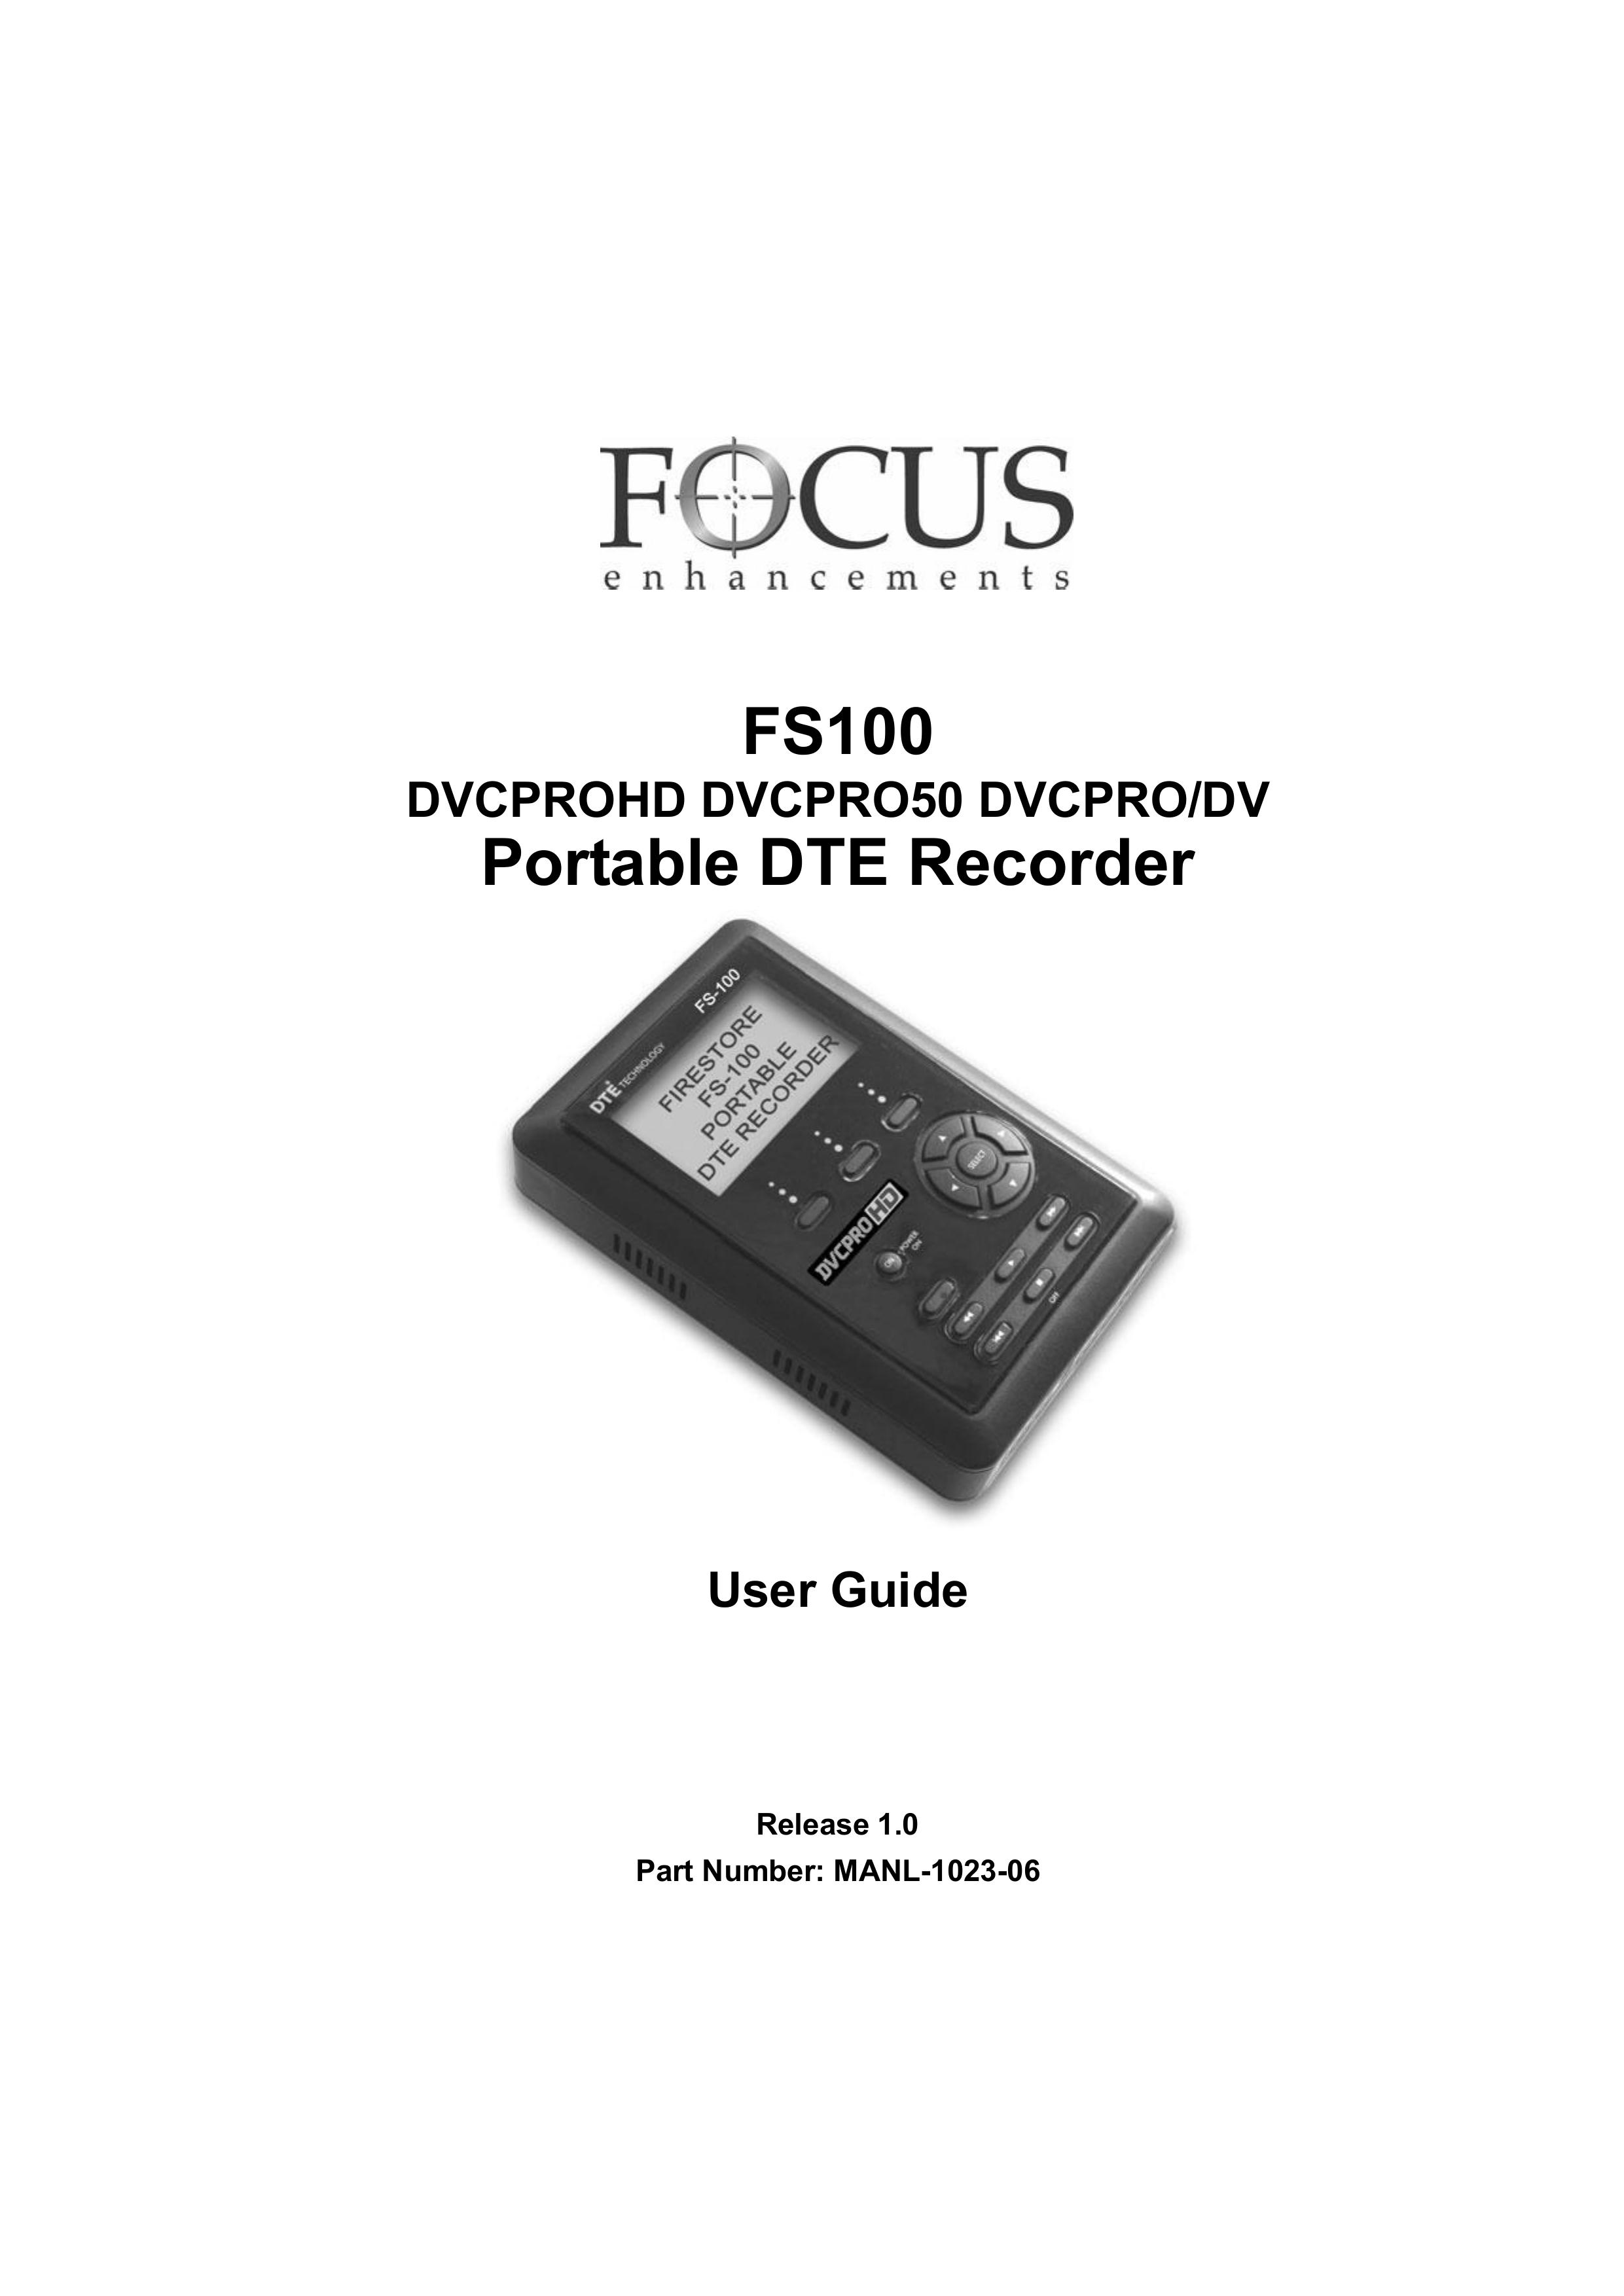 FOCUS Enhancements FS100 Recording Equipment User Manual